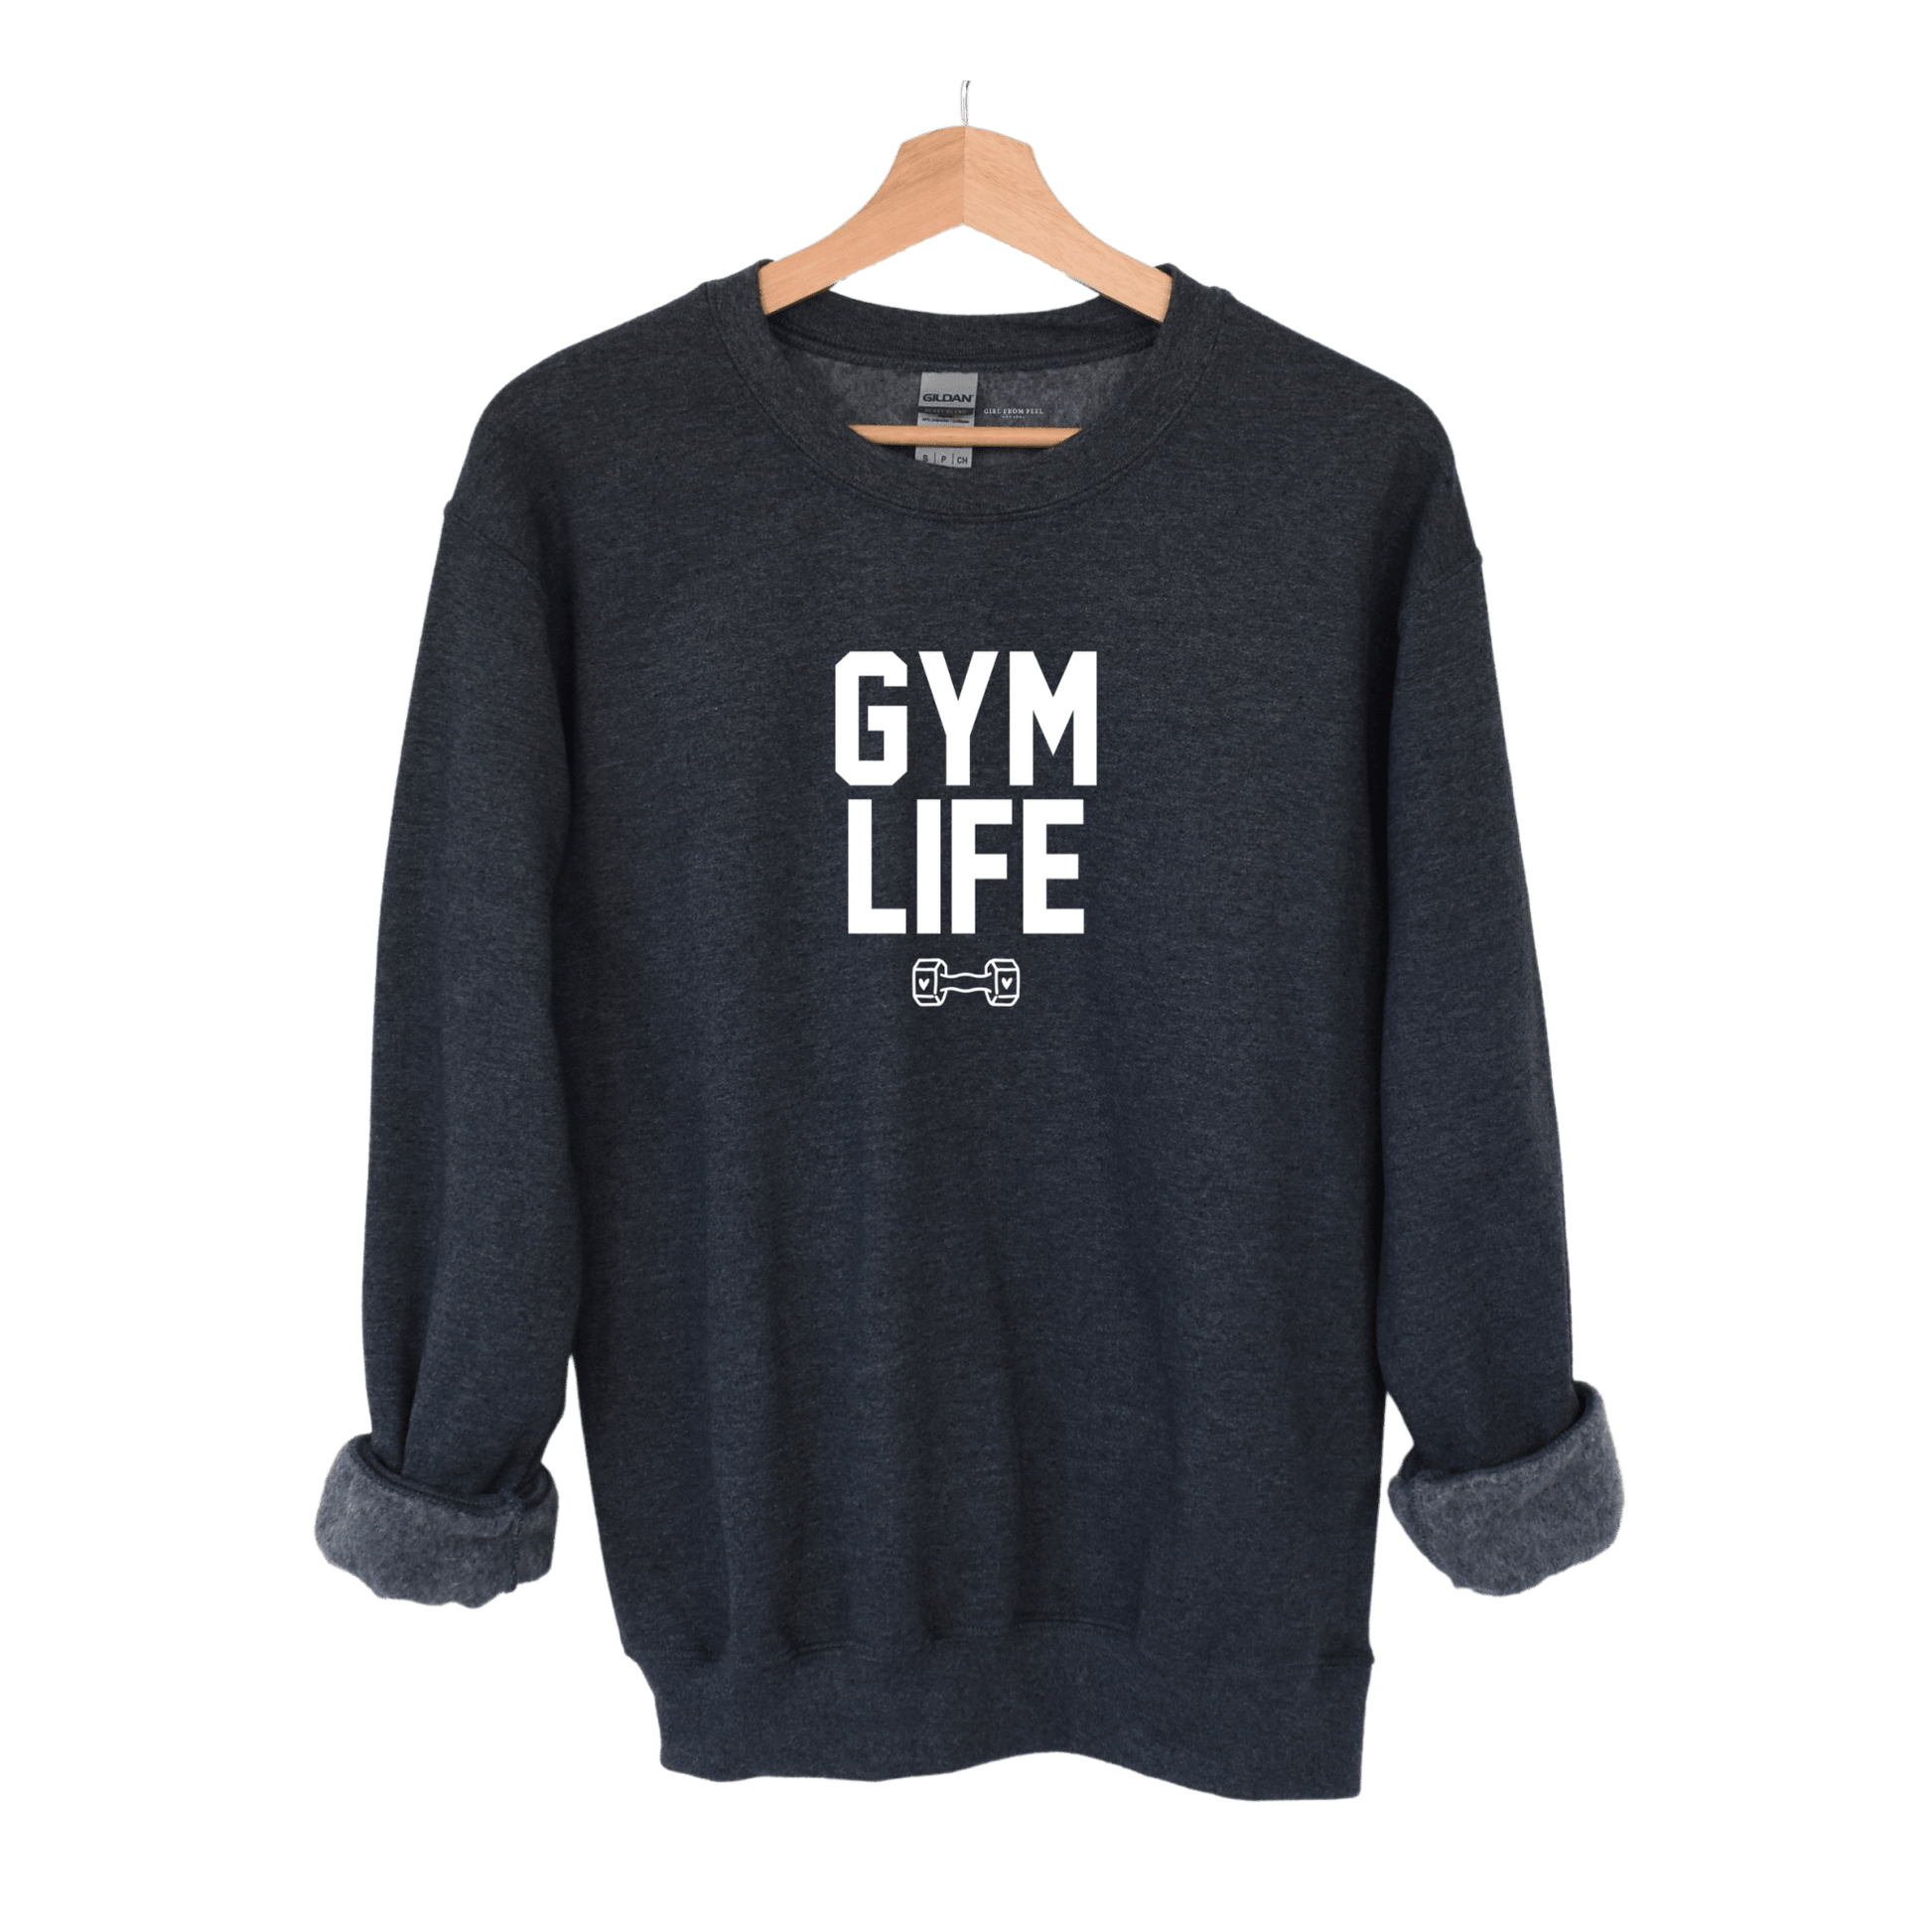 Gym Life Fleece - Girl From Peel Apparel - Fleece